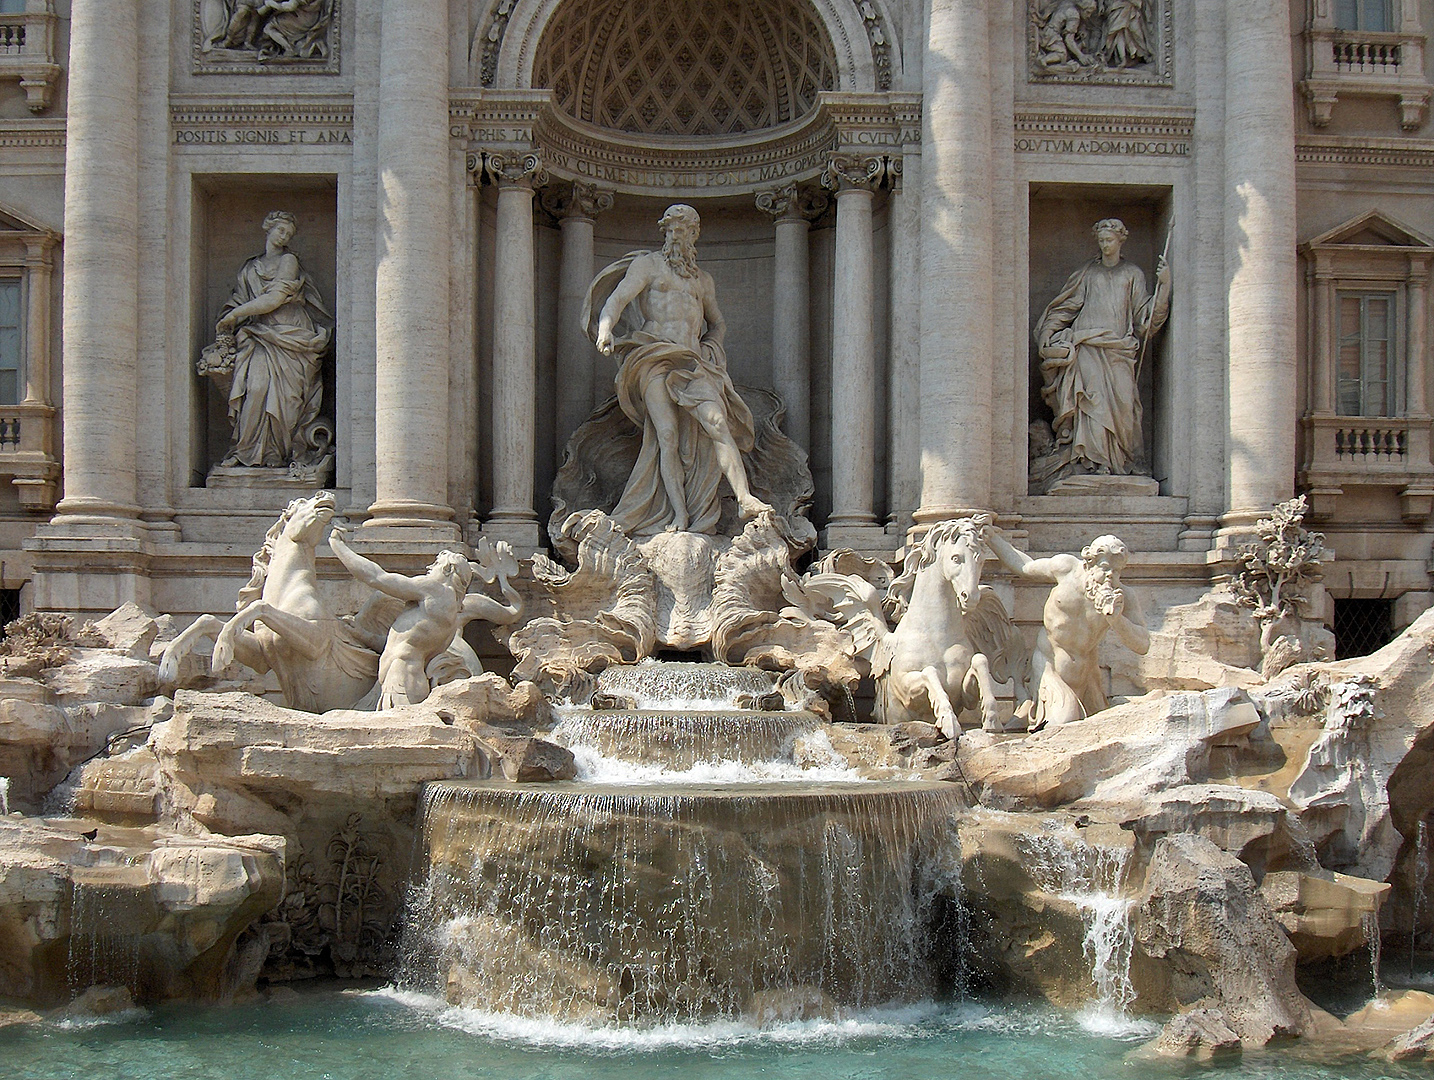 Trevifontein (Rome); Trevi Fountain